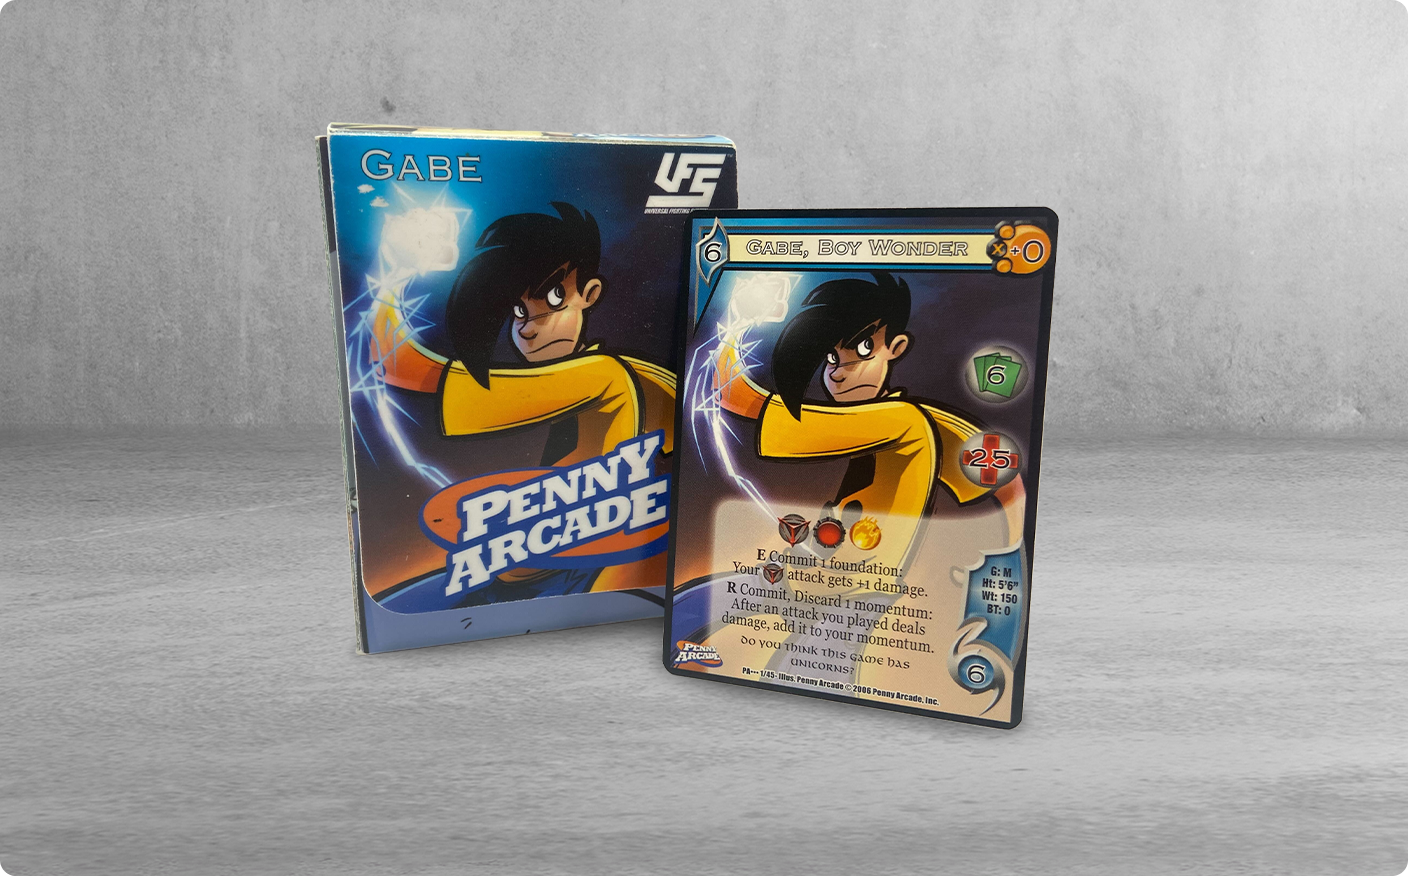 Penny Arcade "Battle Box" that feature the card "Gabe, Boy Wonder"